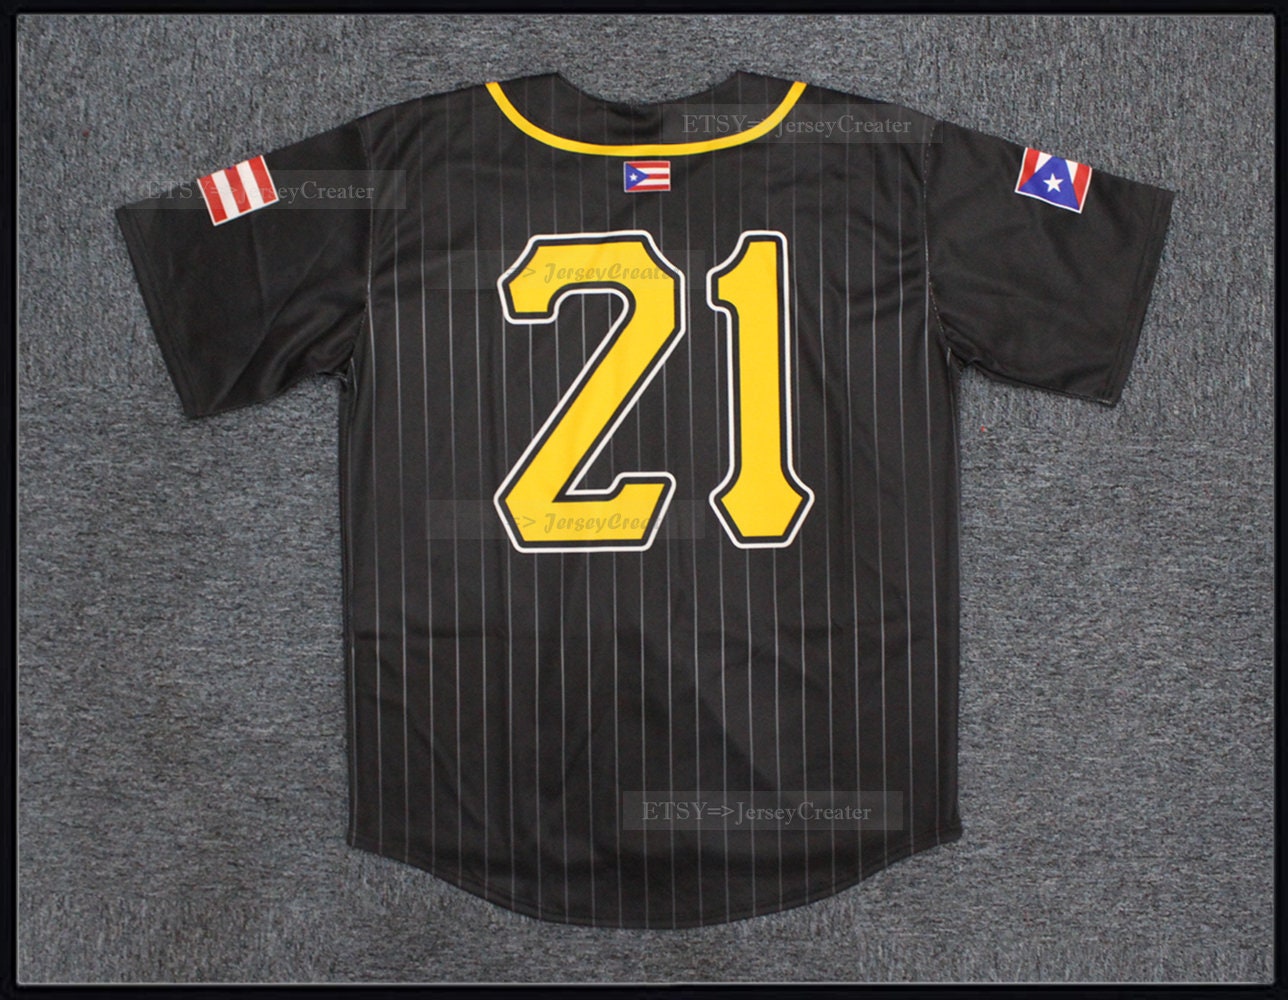 #21 Roberto Clemente Santurce Crabbers Puerto Rico Baseball Jersey Stitched  6 Colors